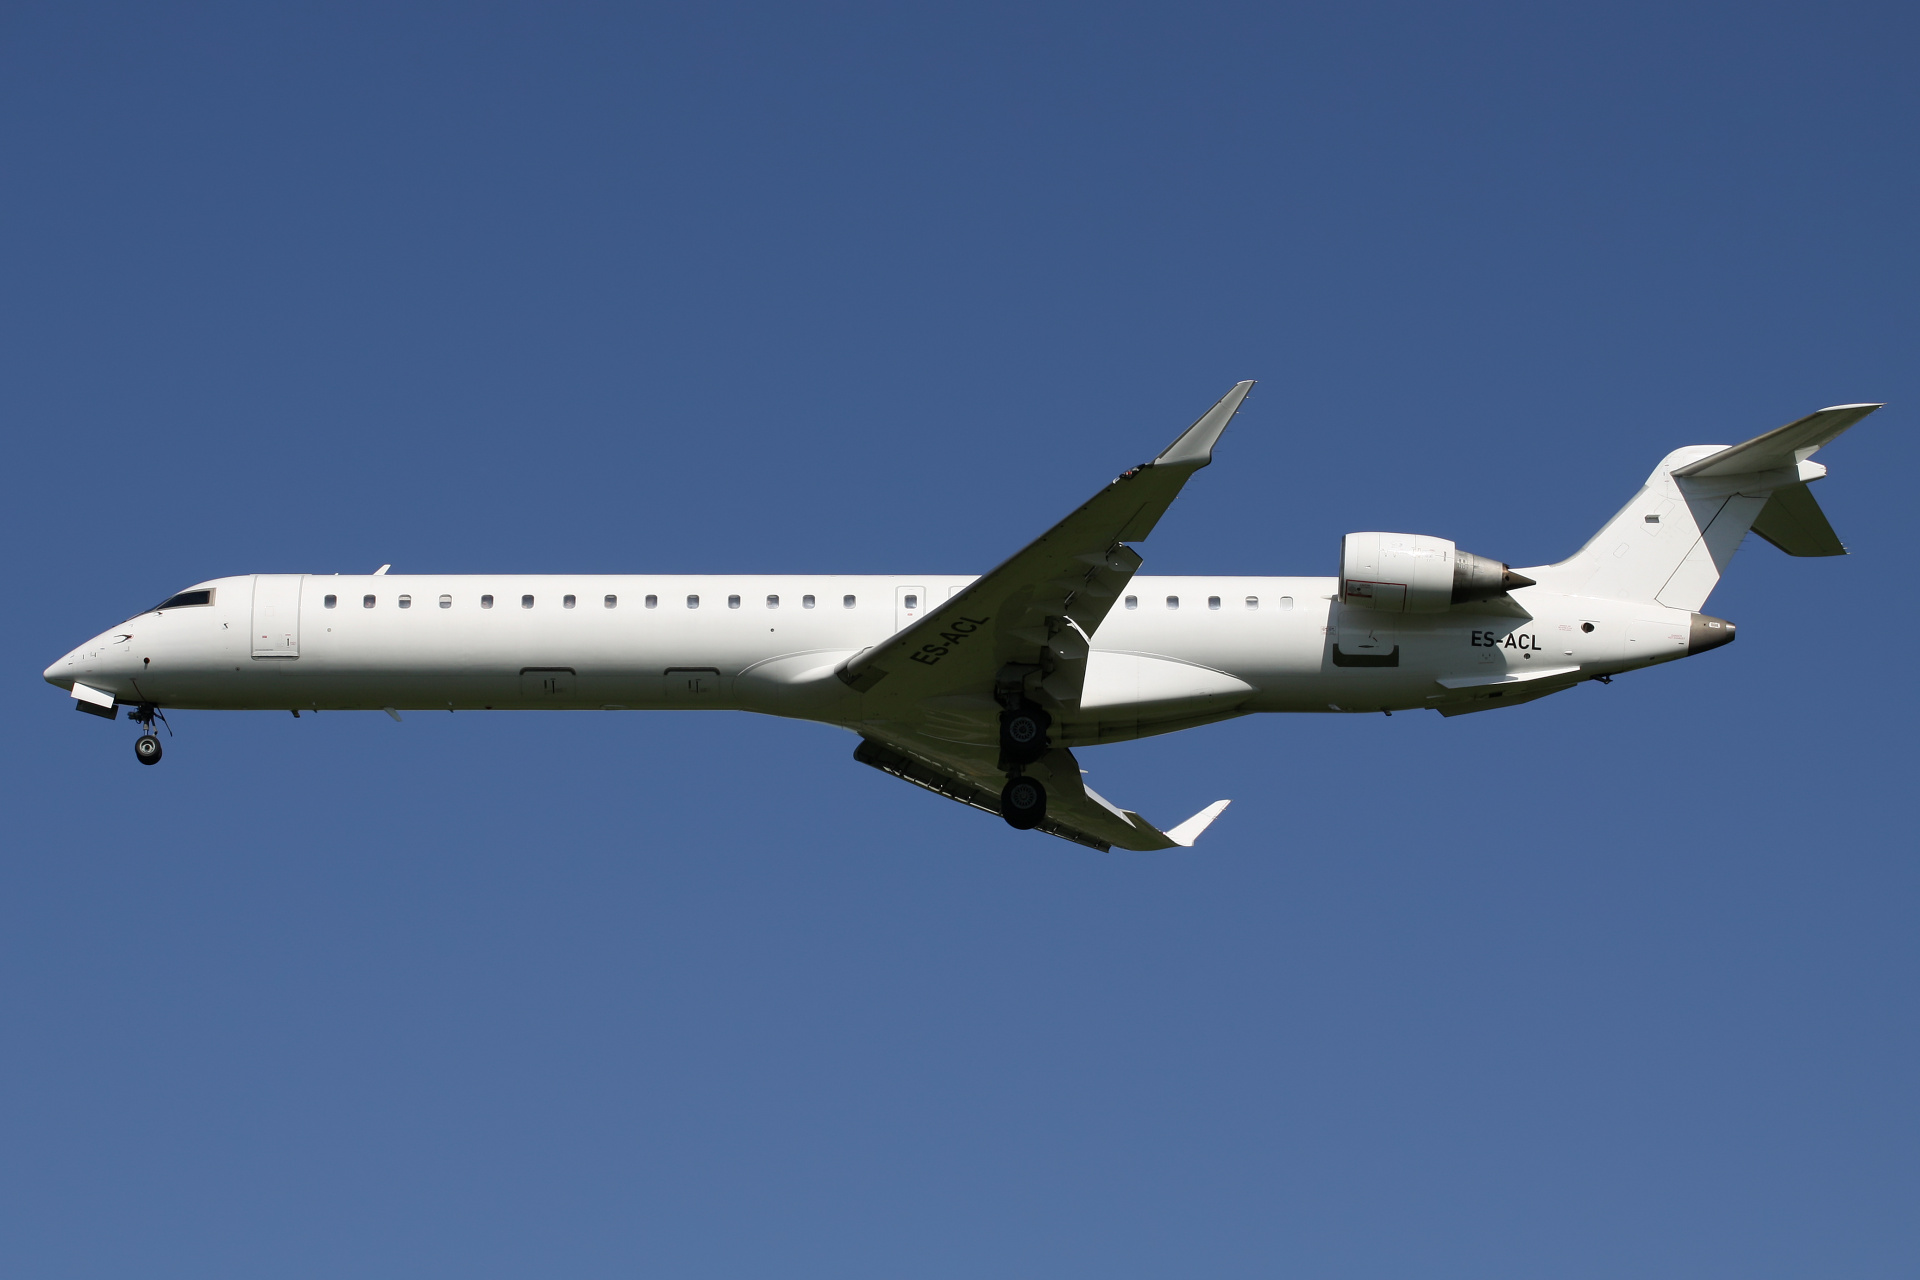 ES-ACL (bez malowania) (Samoloty » Spotting na EPWA » Mitsubishi Regional Jet » CRJ-900 » Nordica)